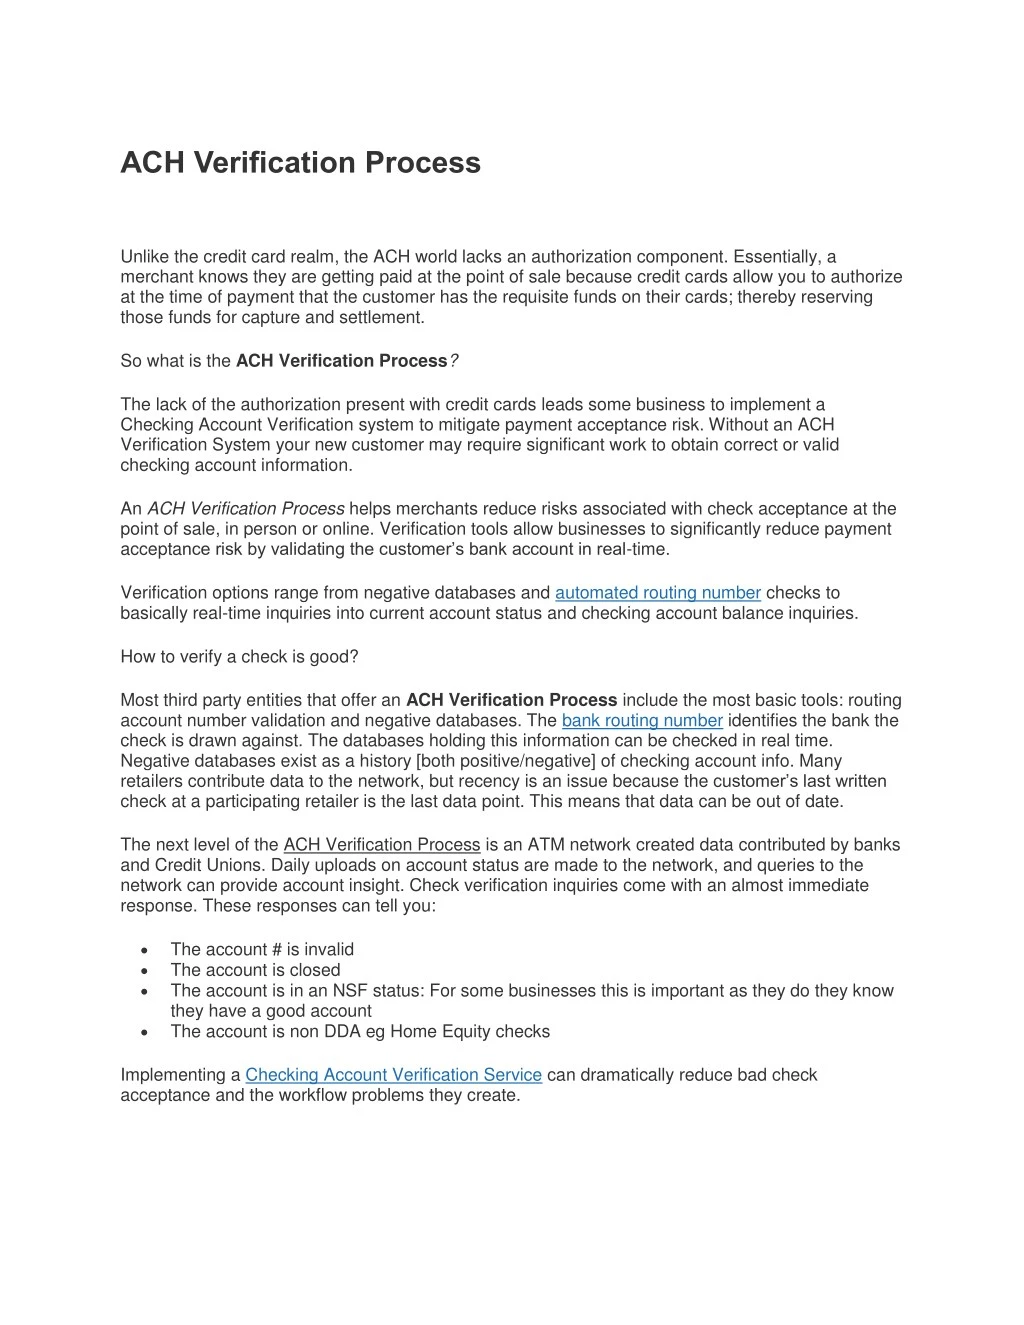 ach verification process